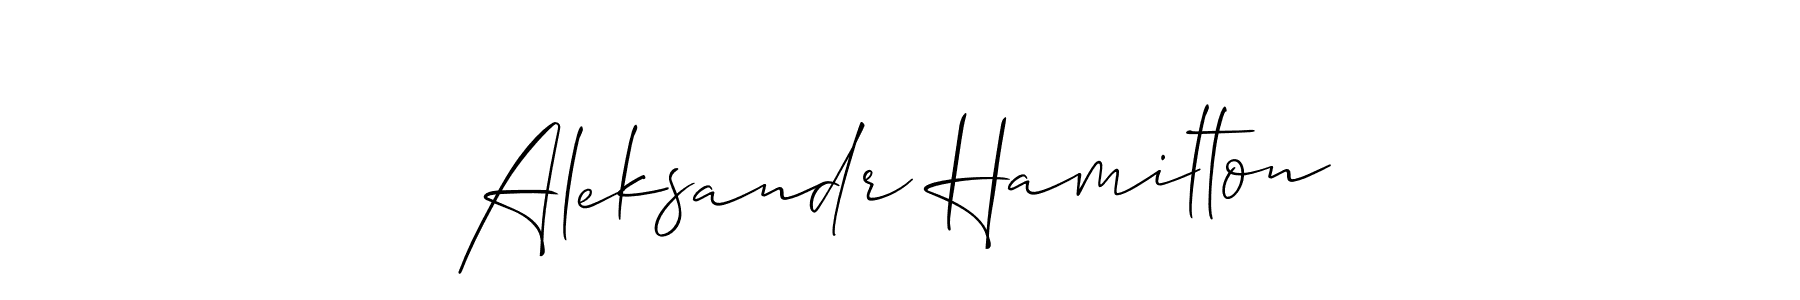 79+ Aleksandr Hamilton Name Signature Style Ideas | FREE Online Autograph